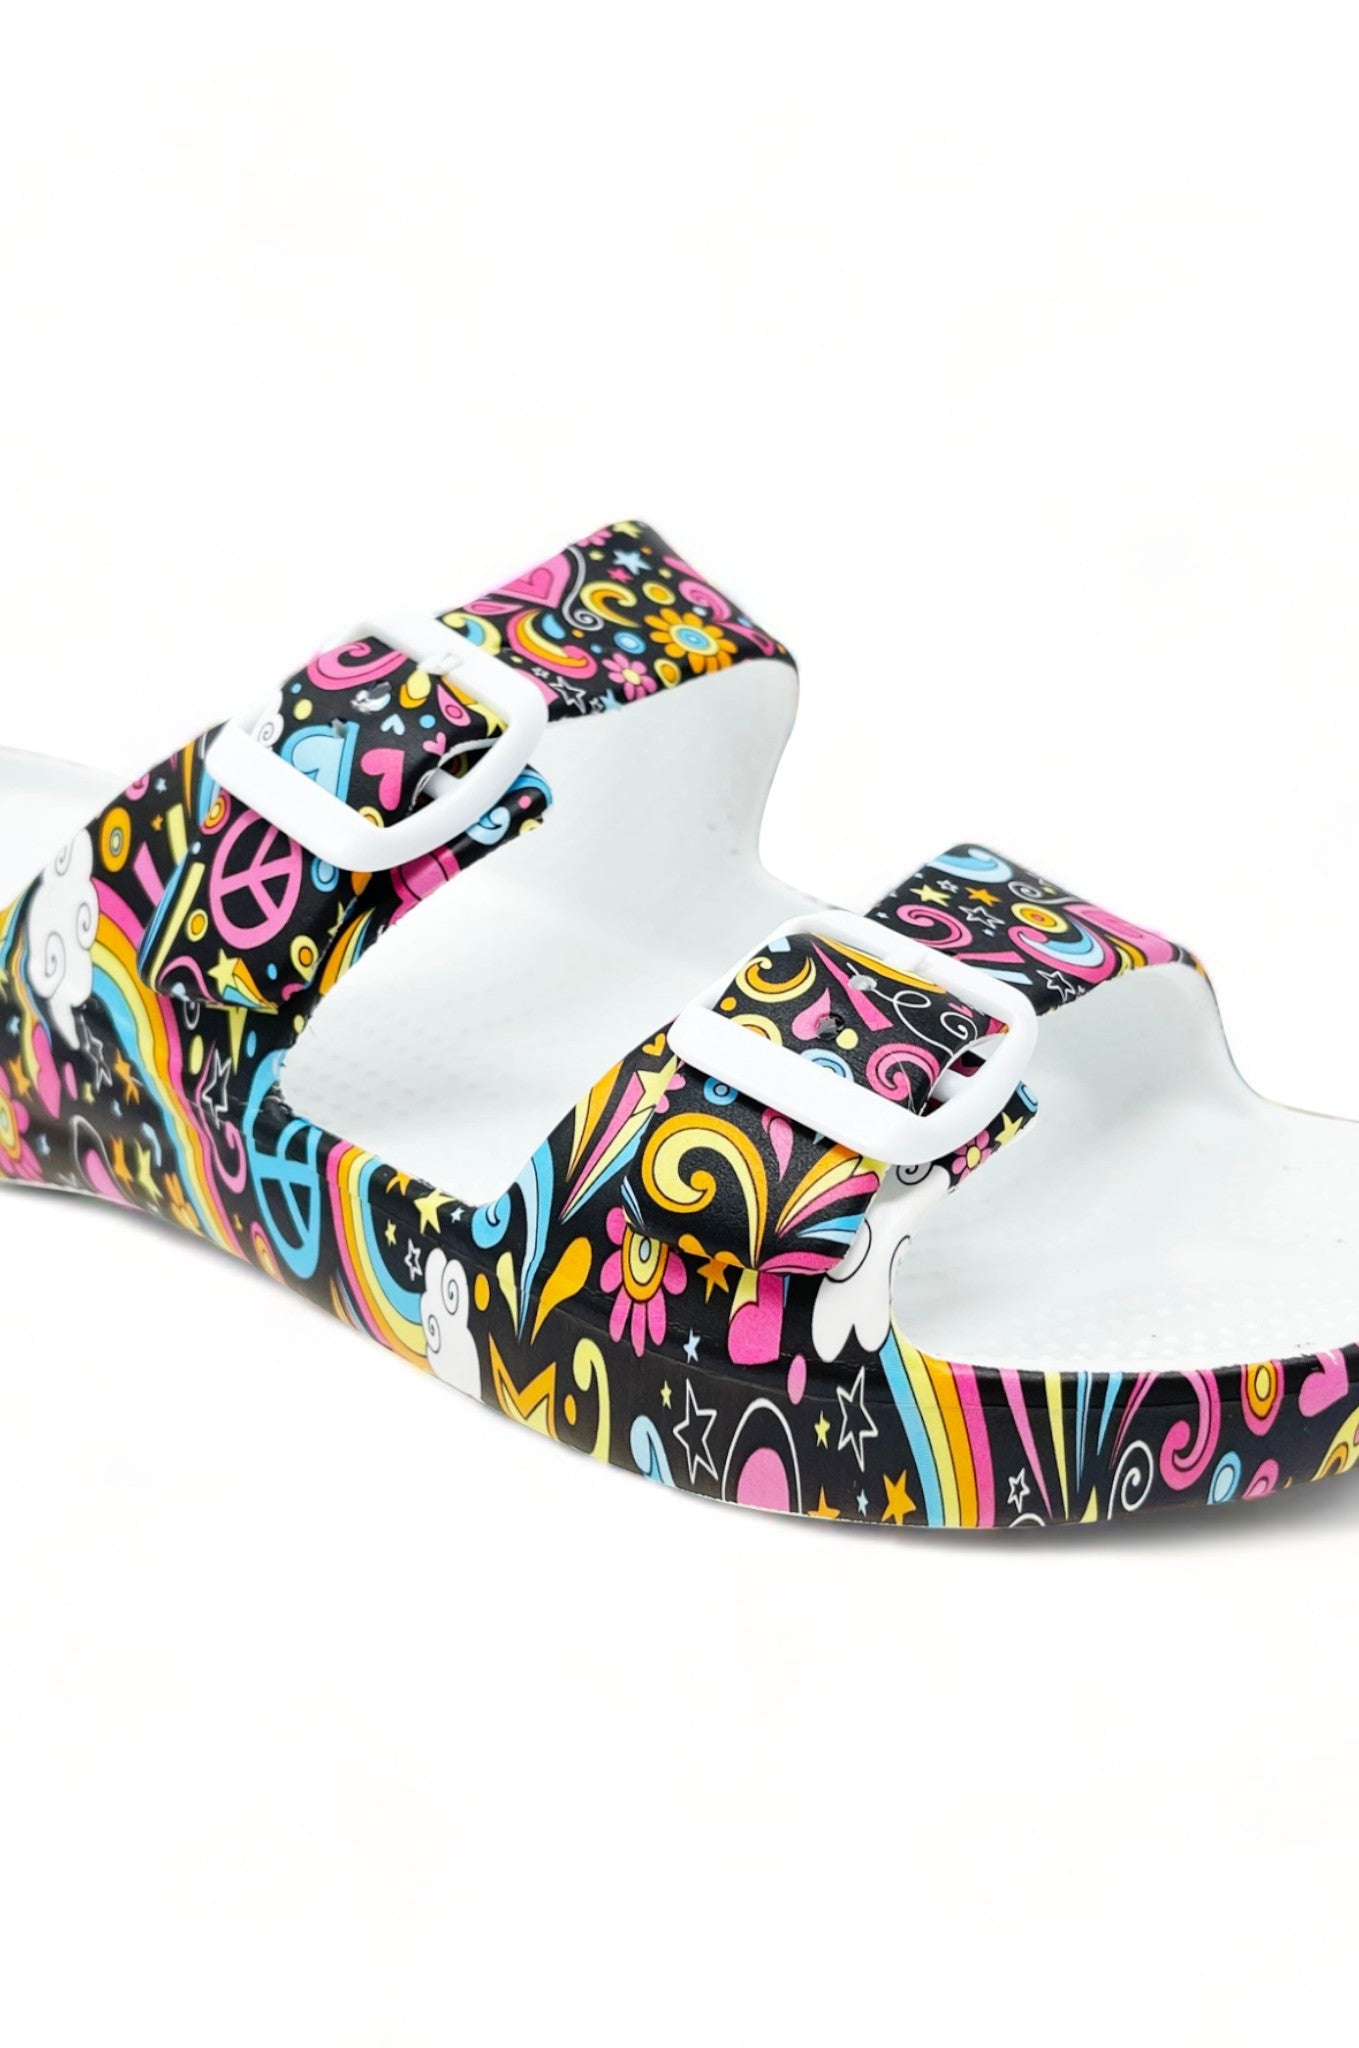 Women's PAW Print Adjustable 2-Strap Sandals DAWGS USA